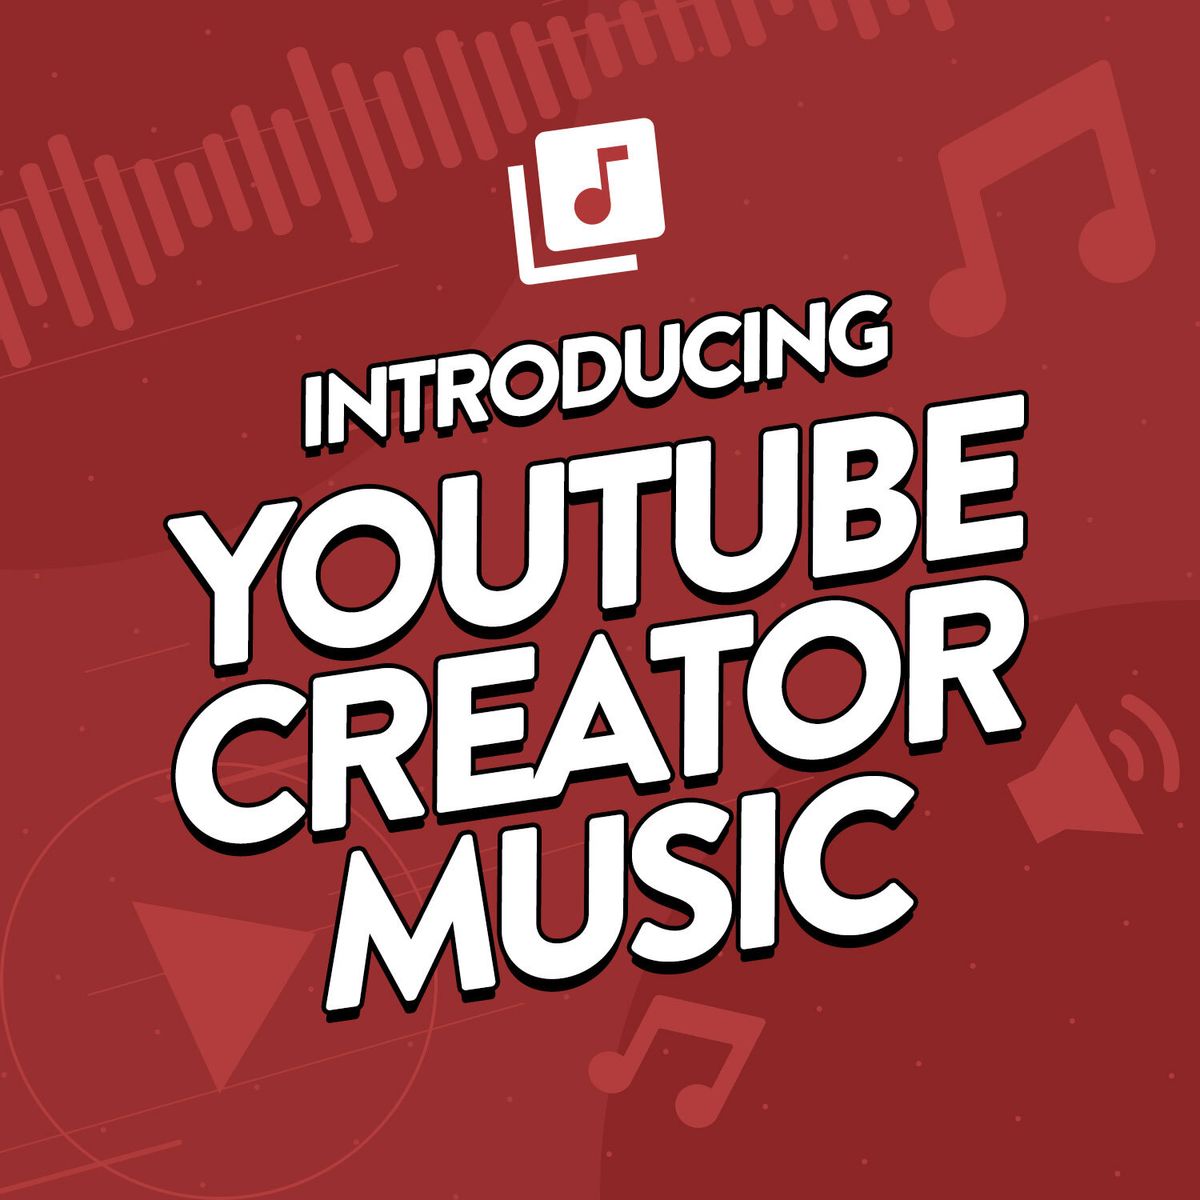 Illustration introducing YouTube Creator Music.